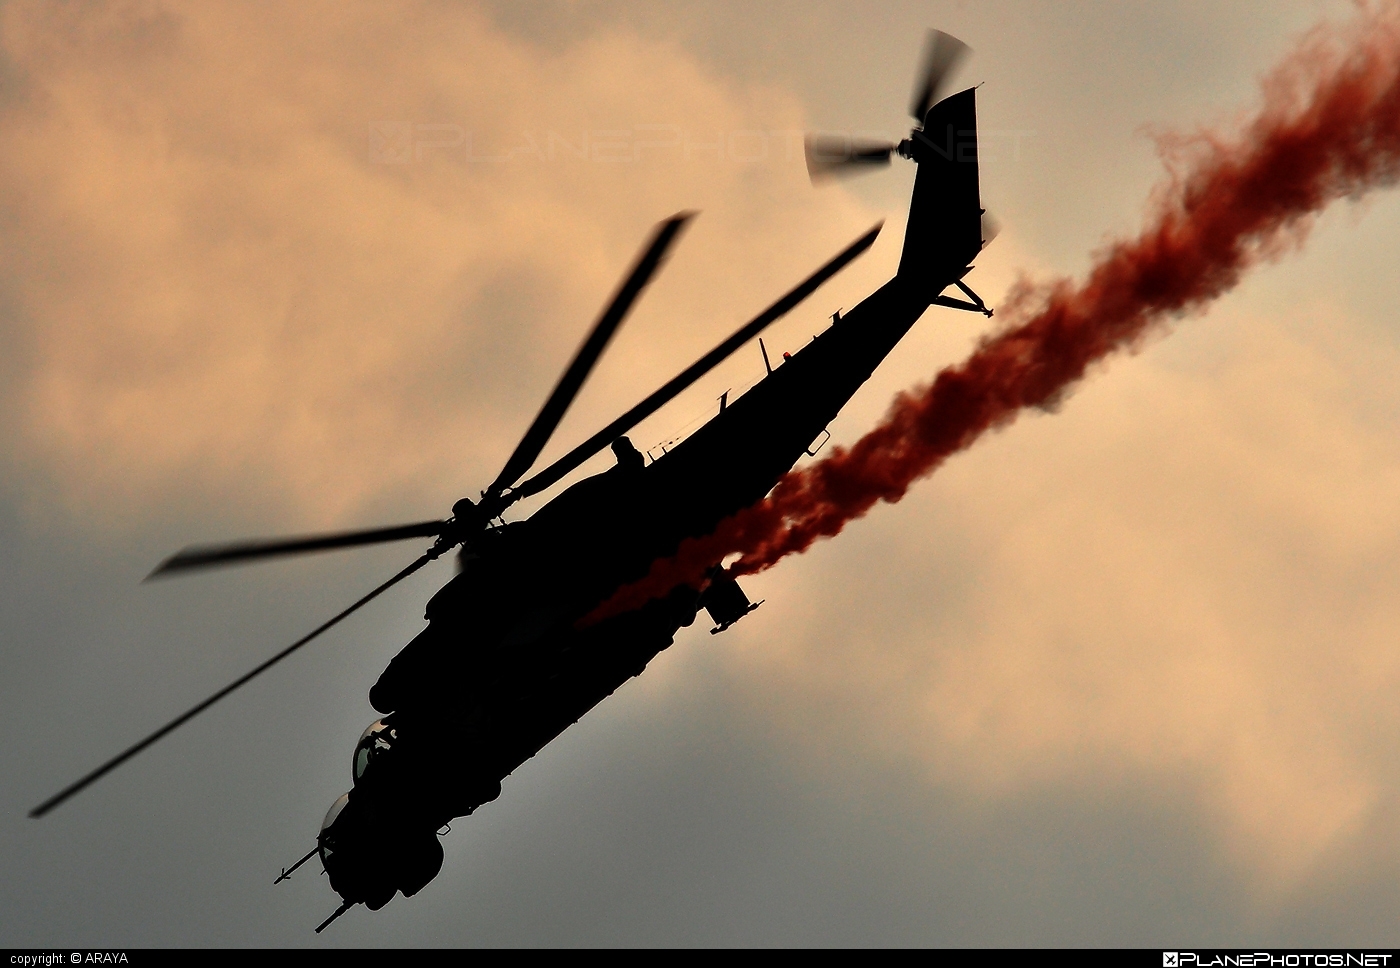 Mil Mi-24V - 7353 operated by Vzdušné síly AČR (Czech Air Force) #czechairforce #mi24 #mi24v #mil #mil24 #mil24v #milhelicopters #vzdusnesilyacr